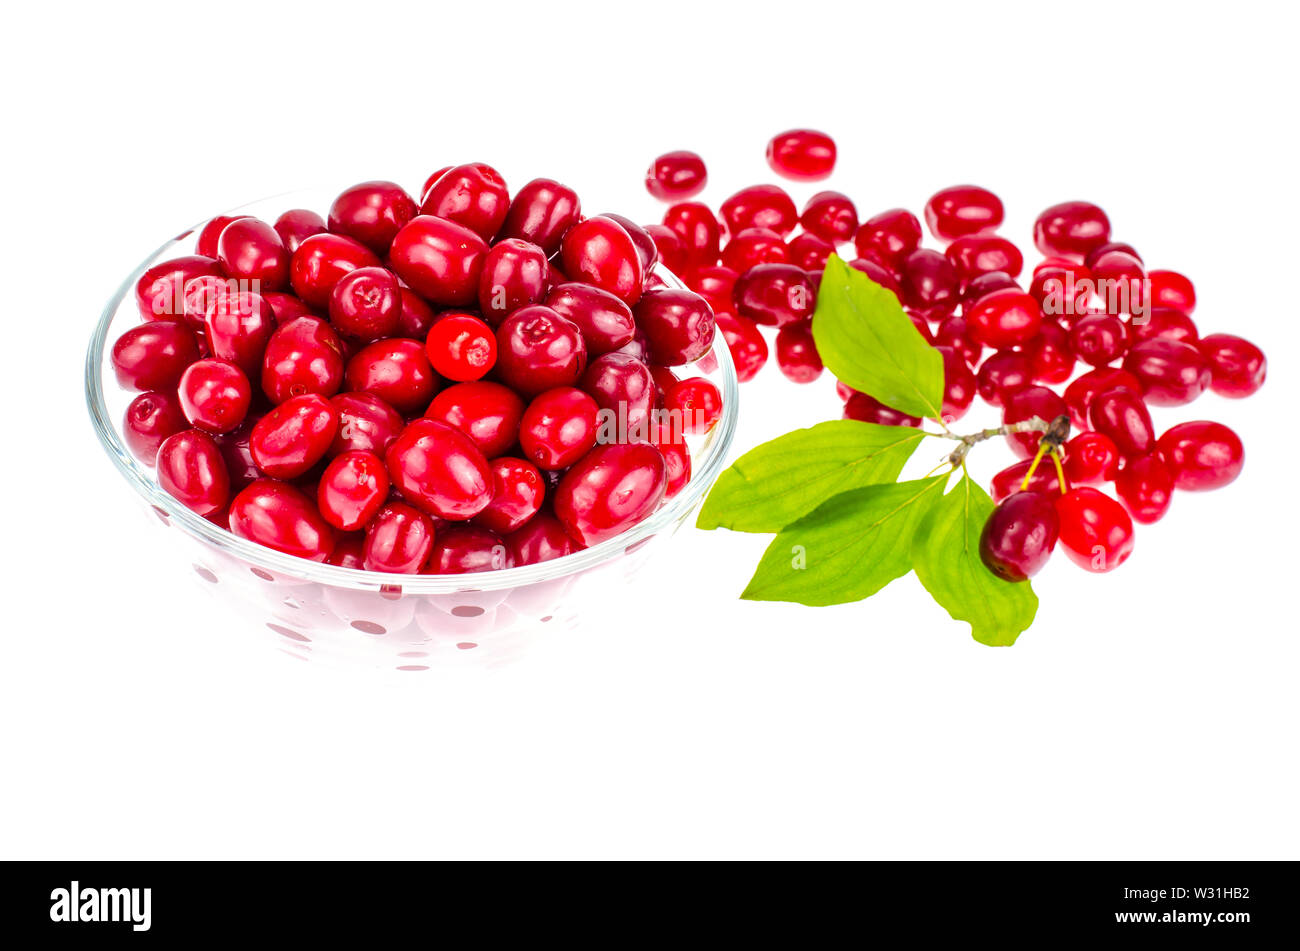 Red ripe berries of Cornus mas Stock Photo